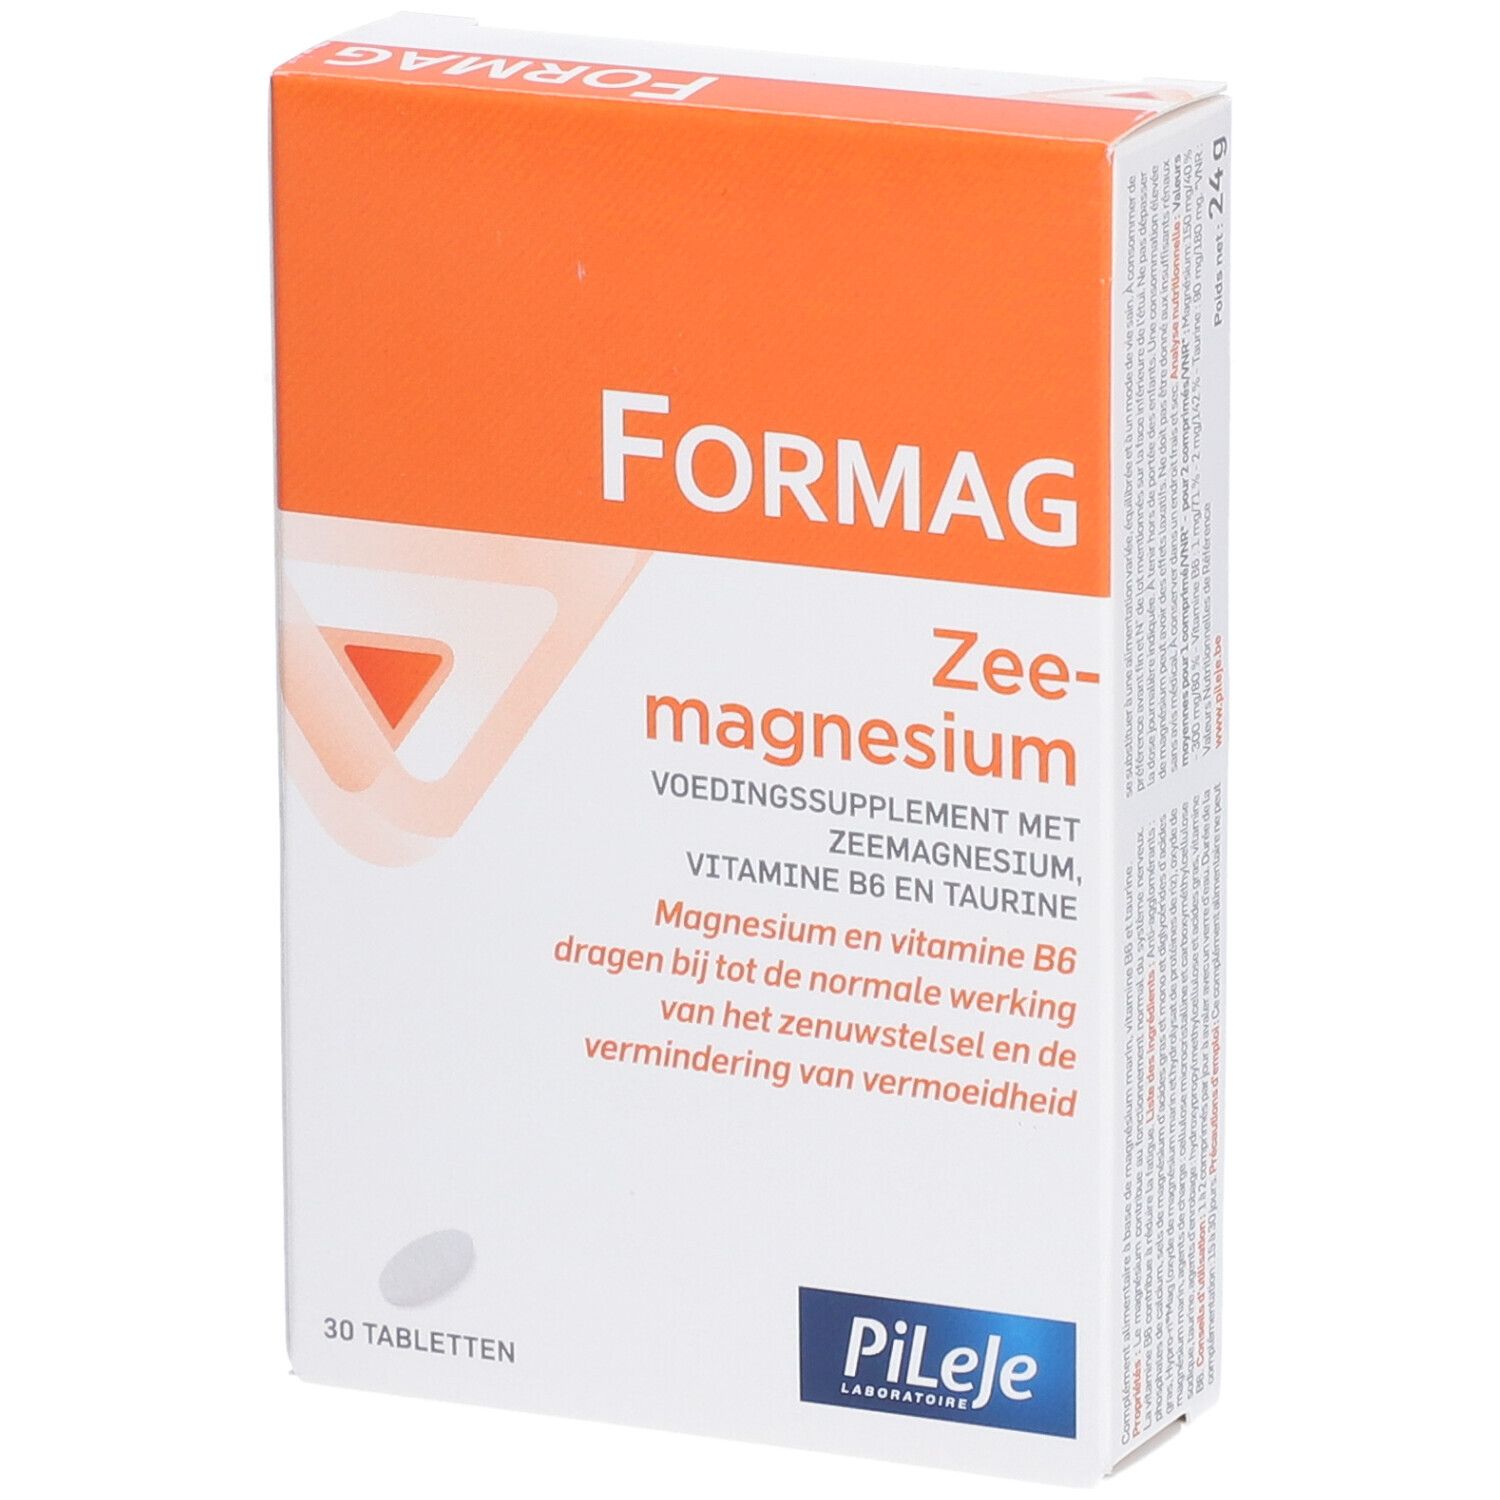 Formag Magnésium marin